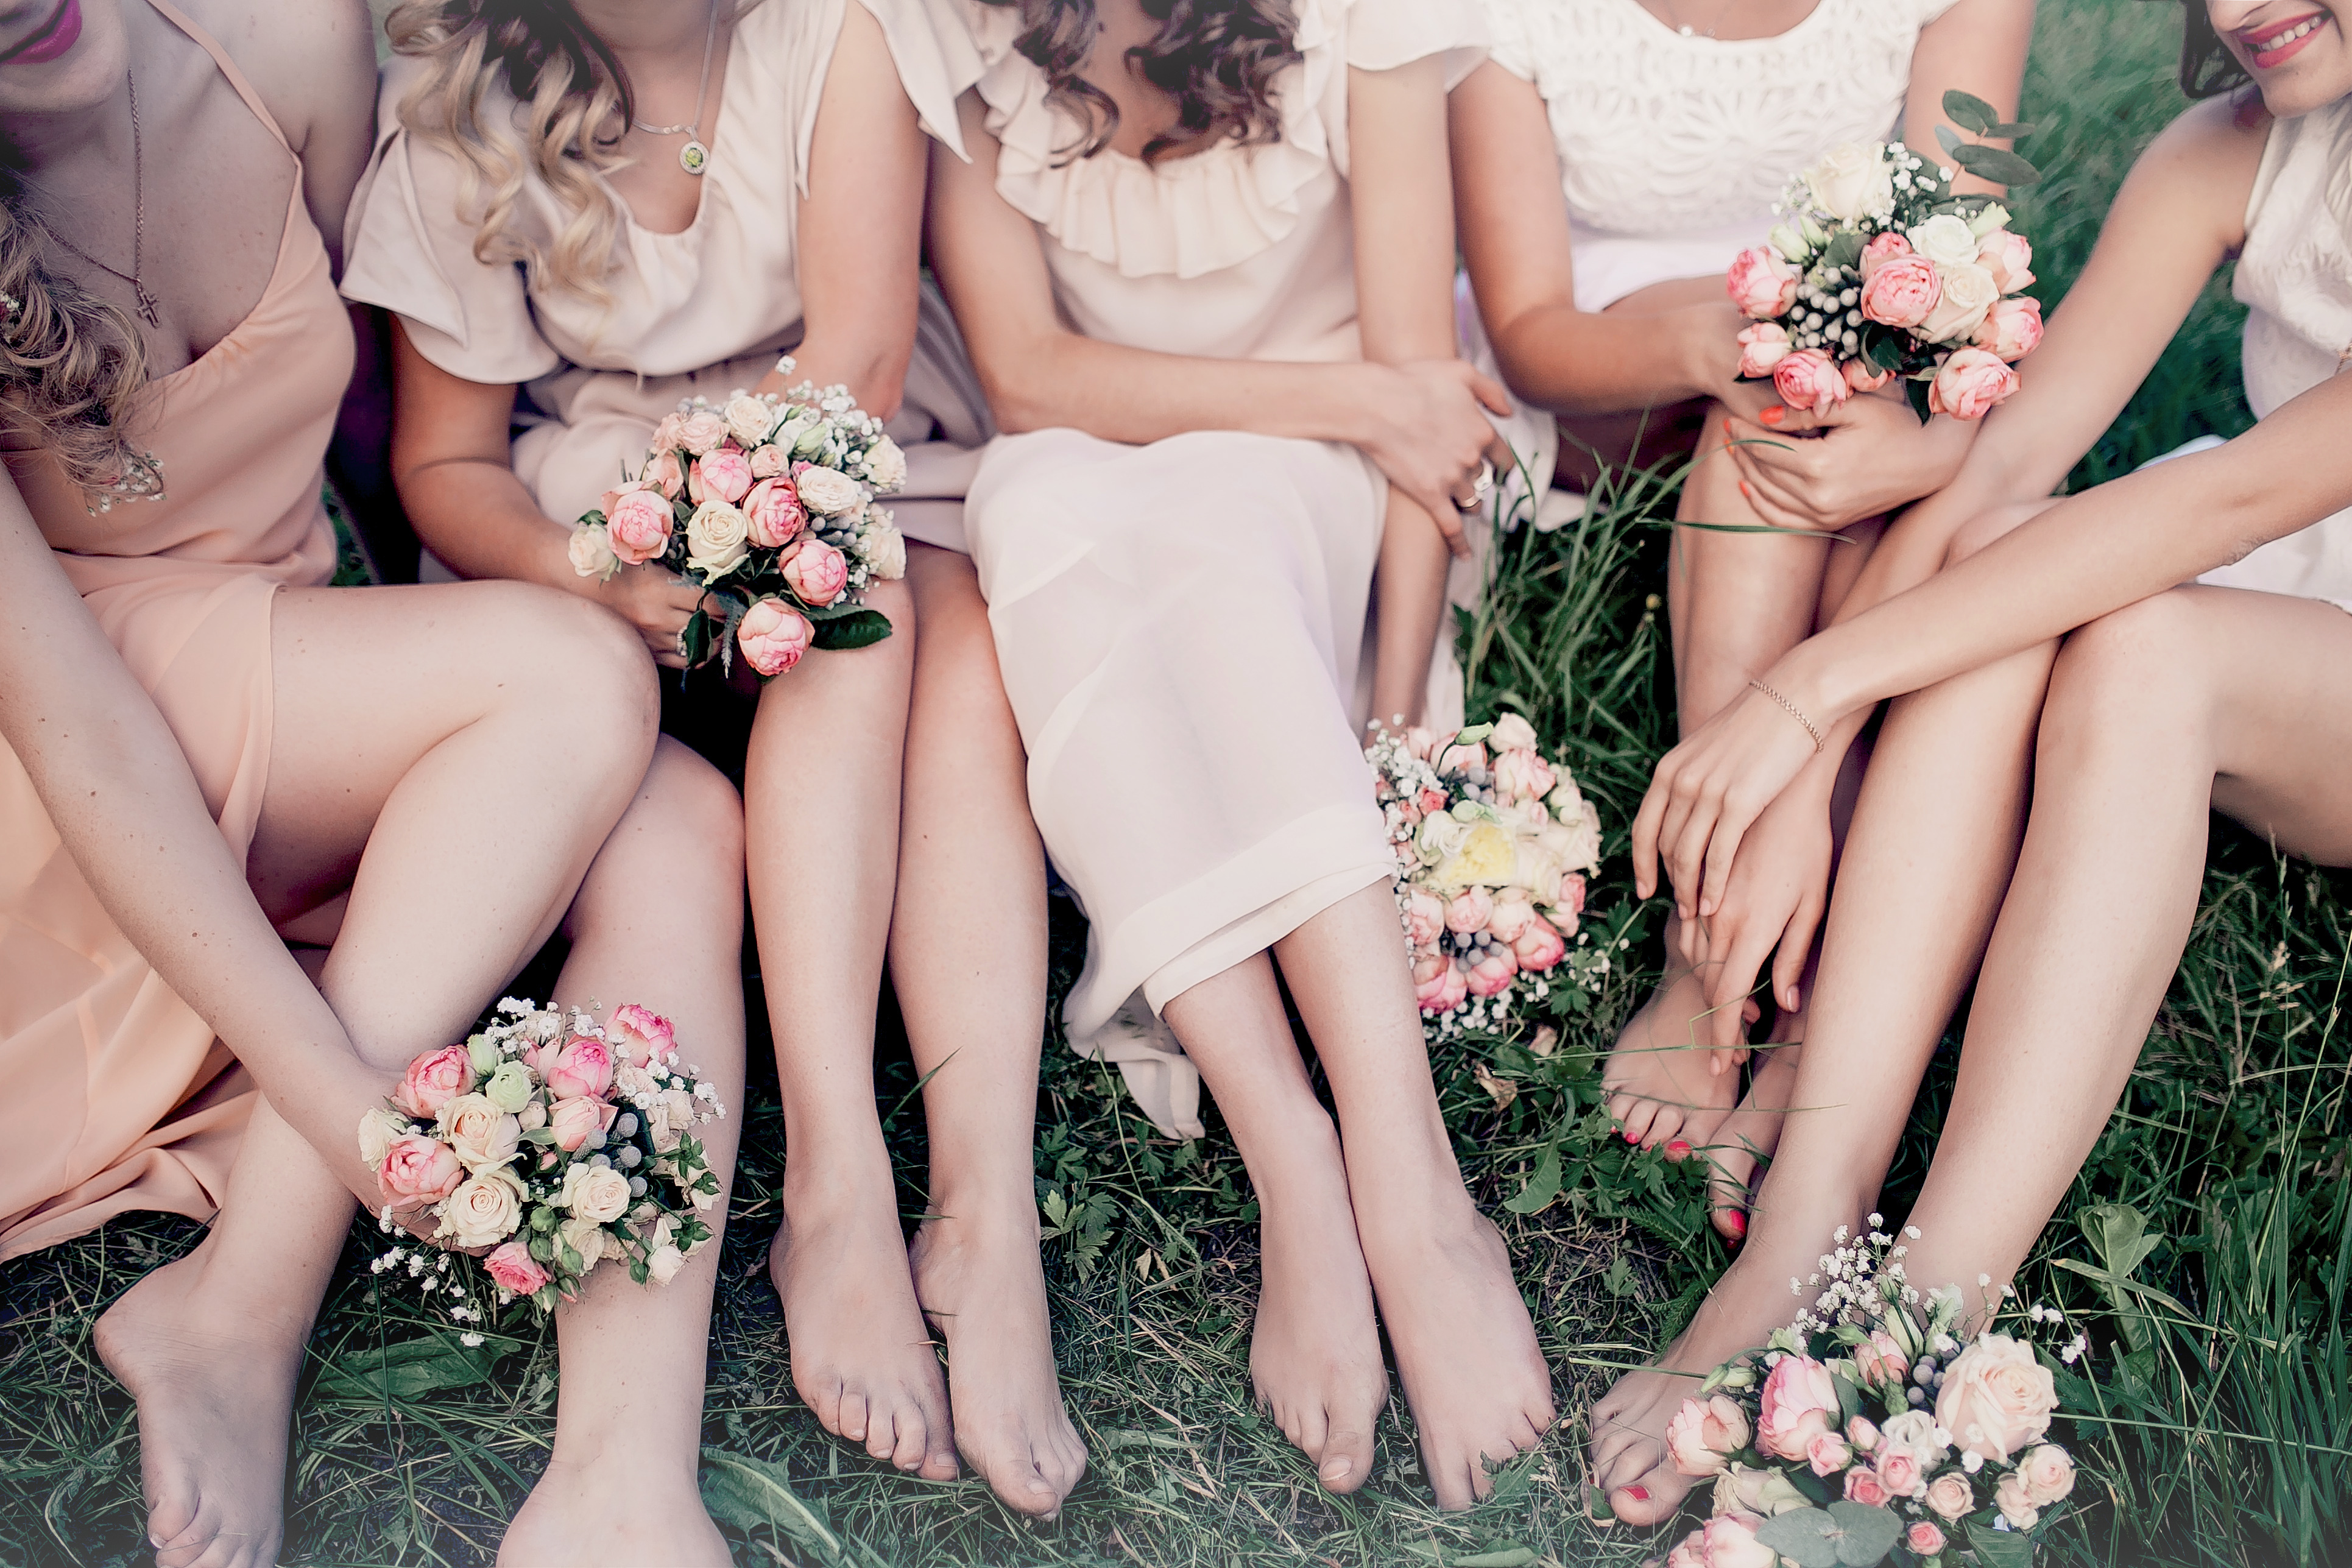 Women sitting together | Source: Shutterstock